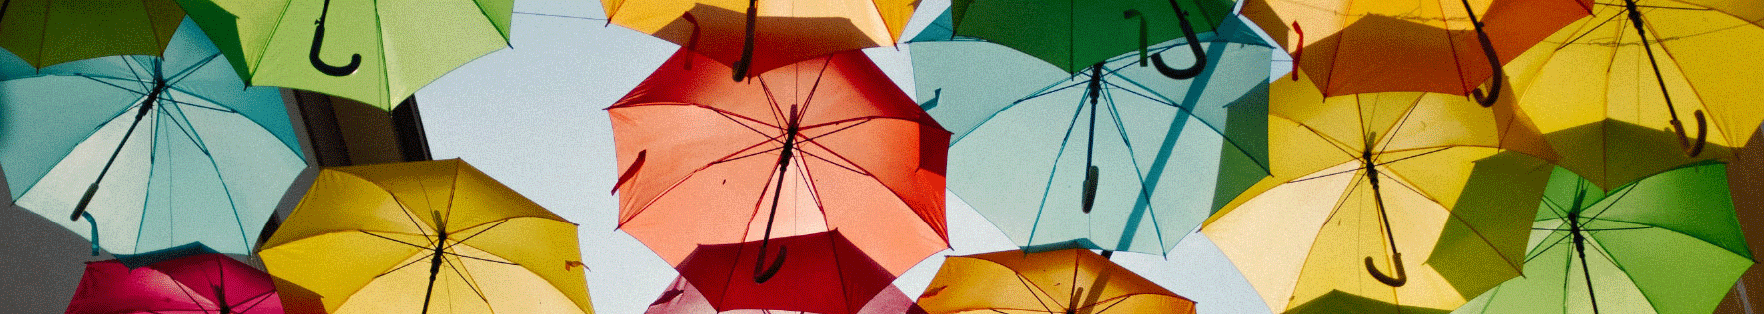 ombrelli str